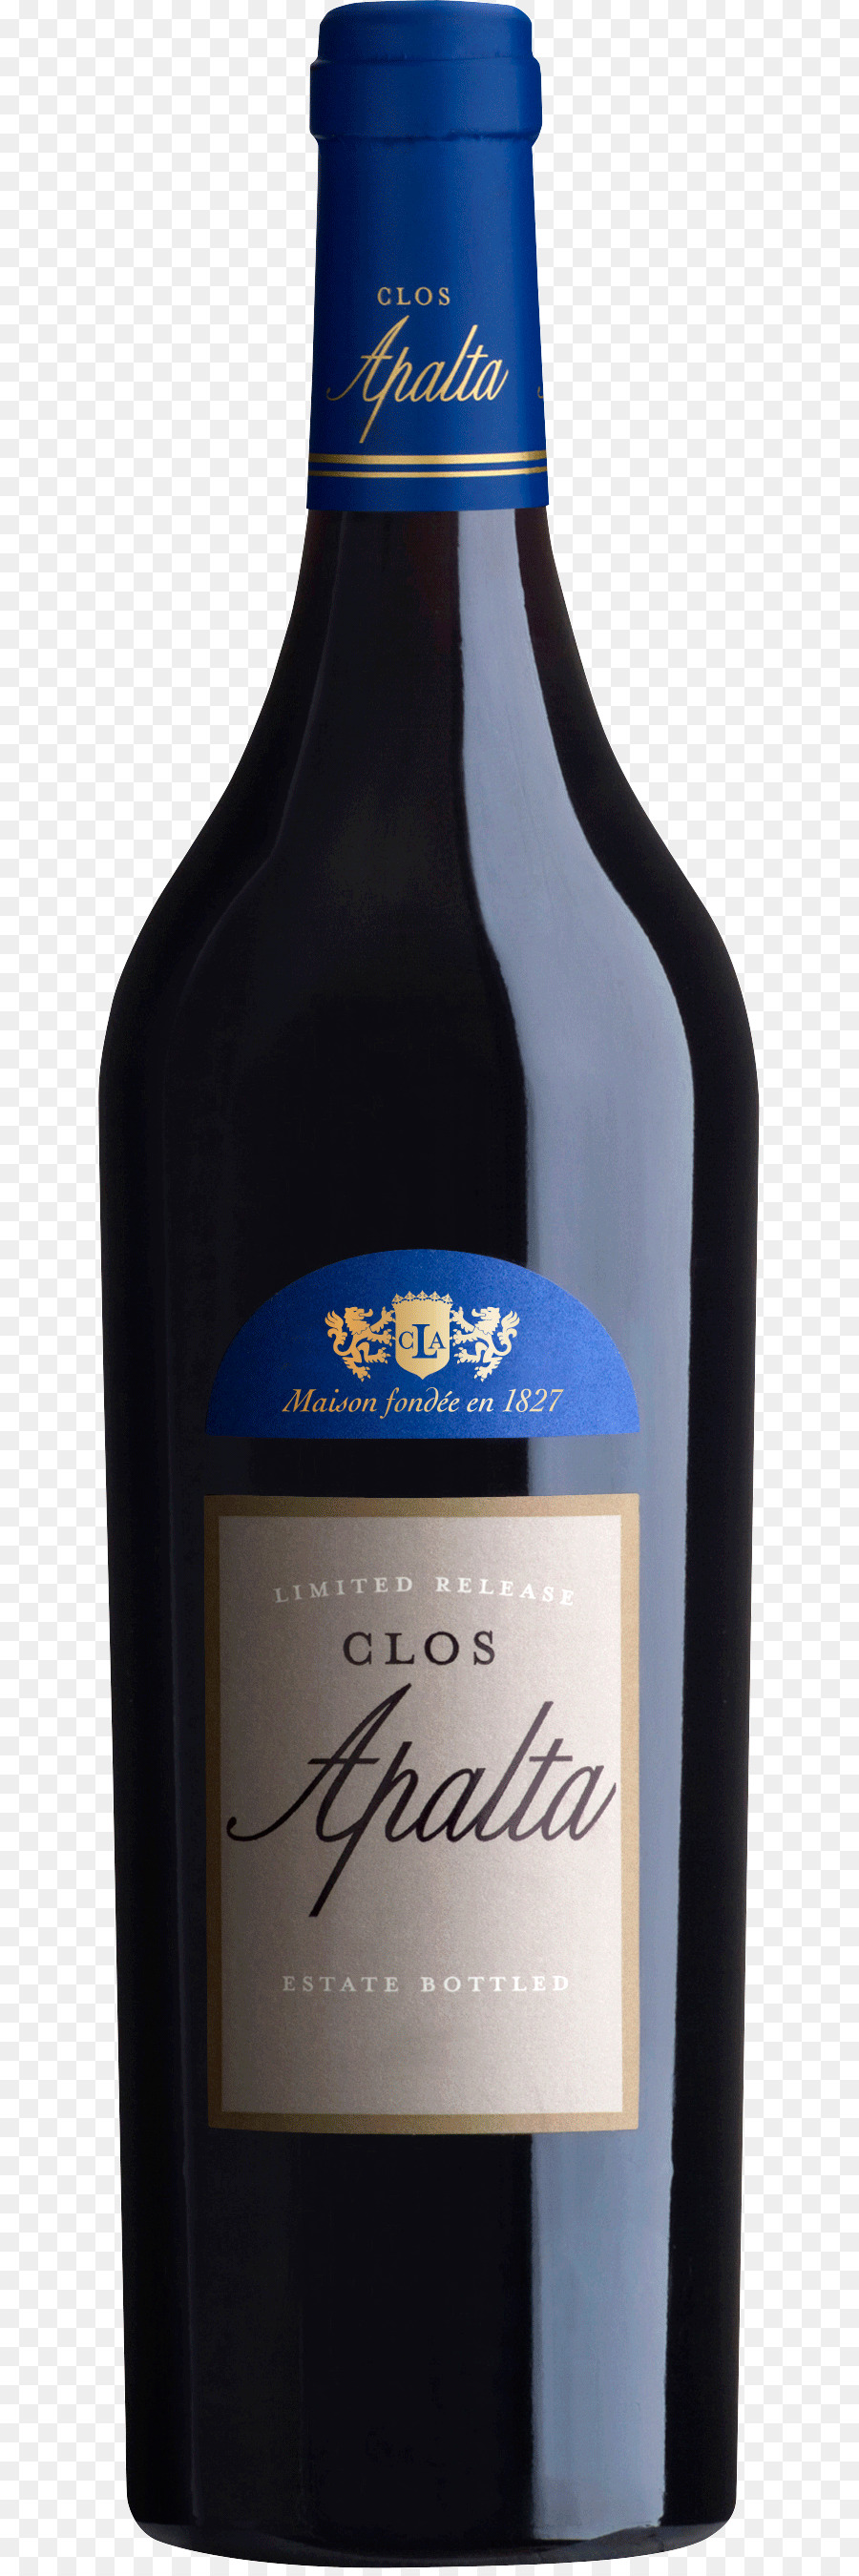 Carmenere weinguts Clos Apalta Winery, Clos Apalta Winery Valle de Colchagua - Wein